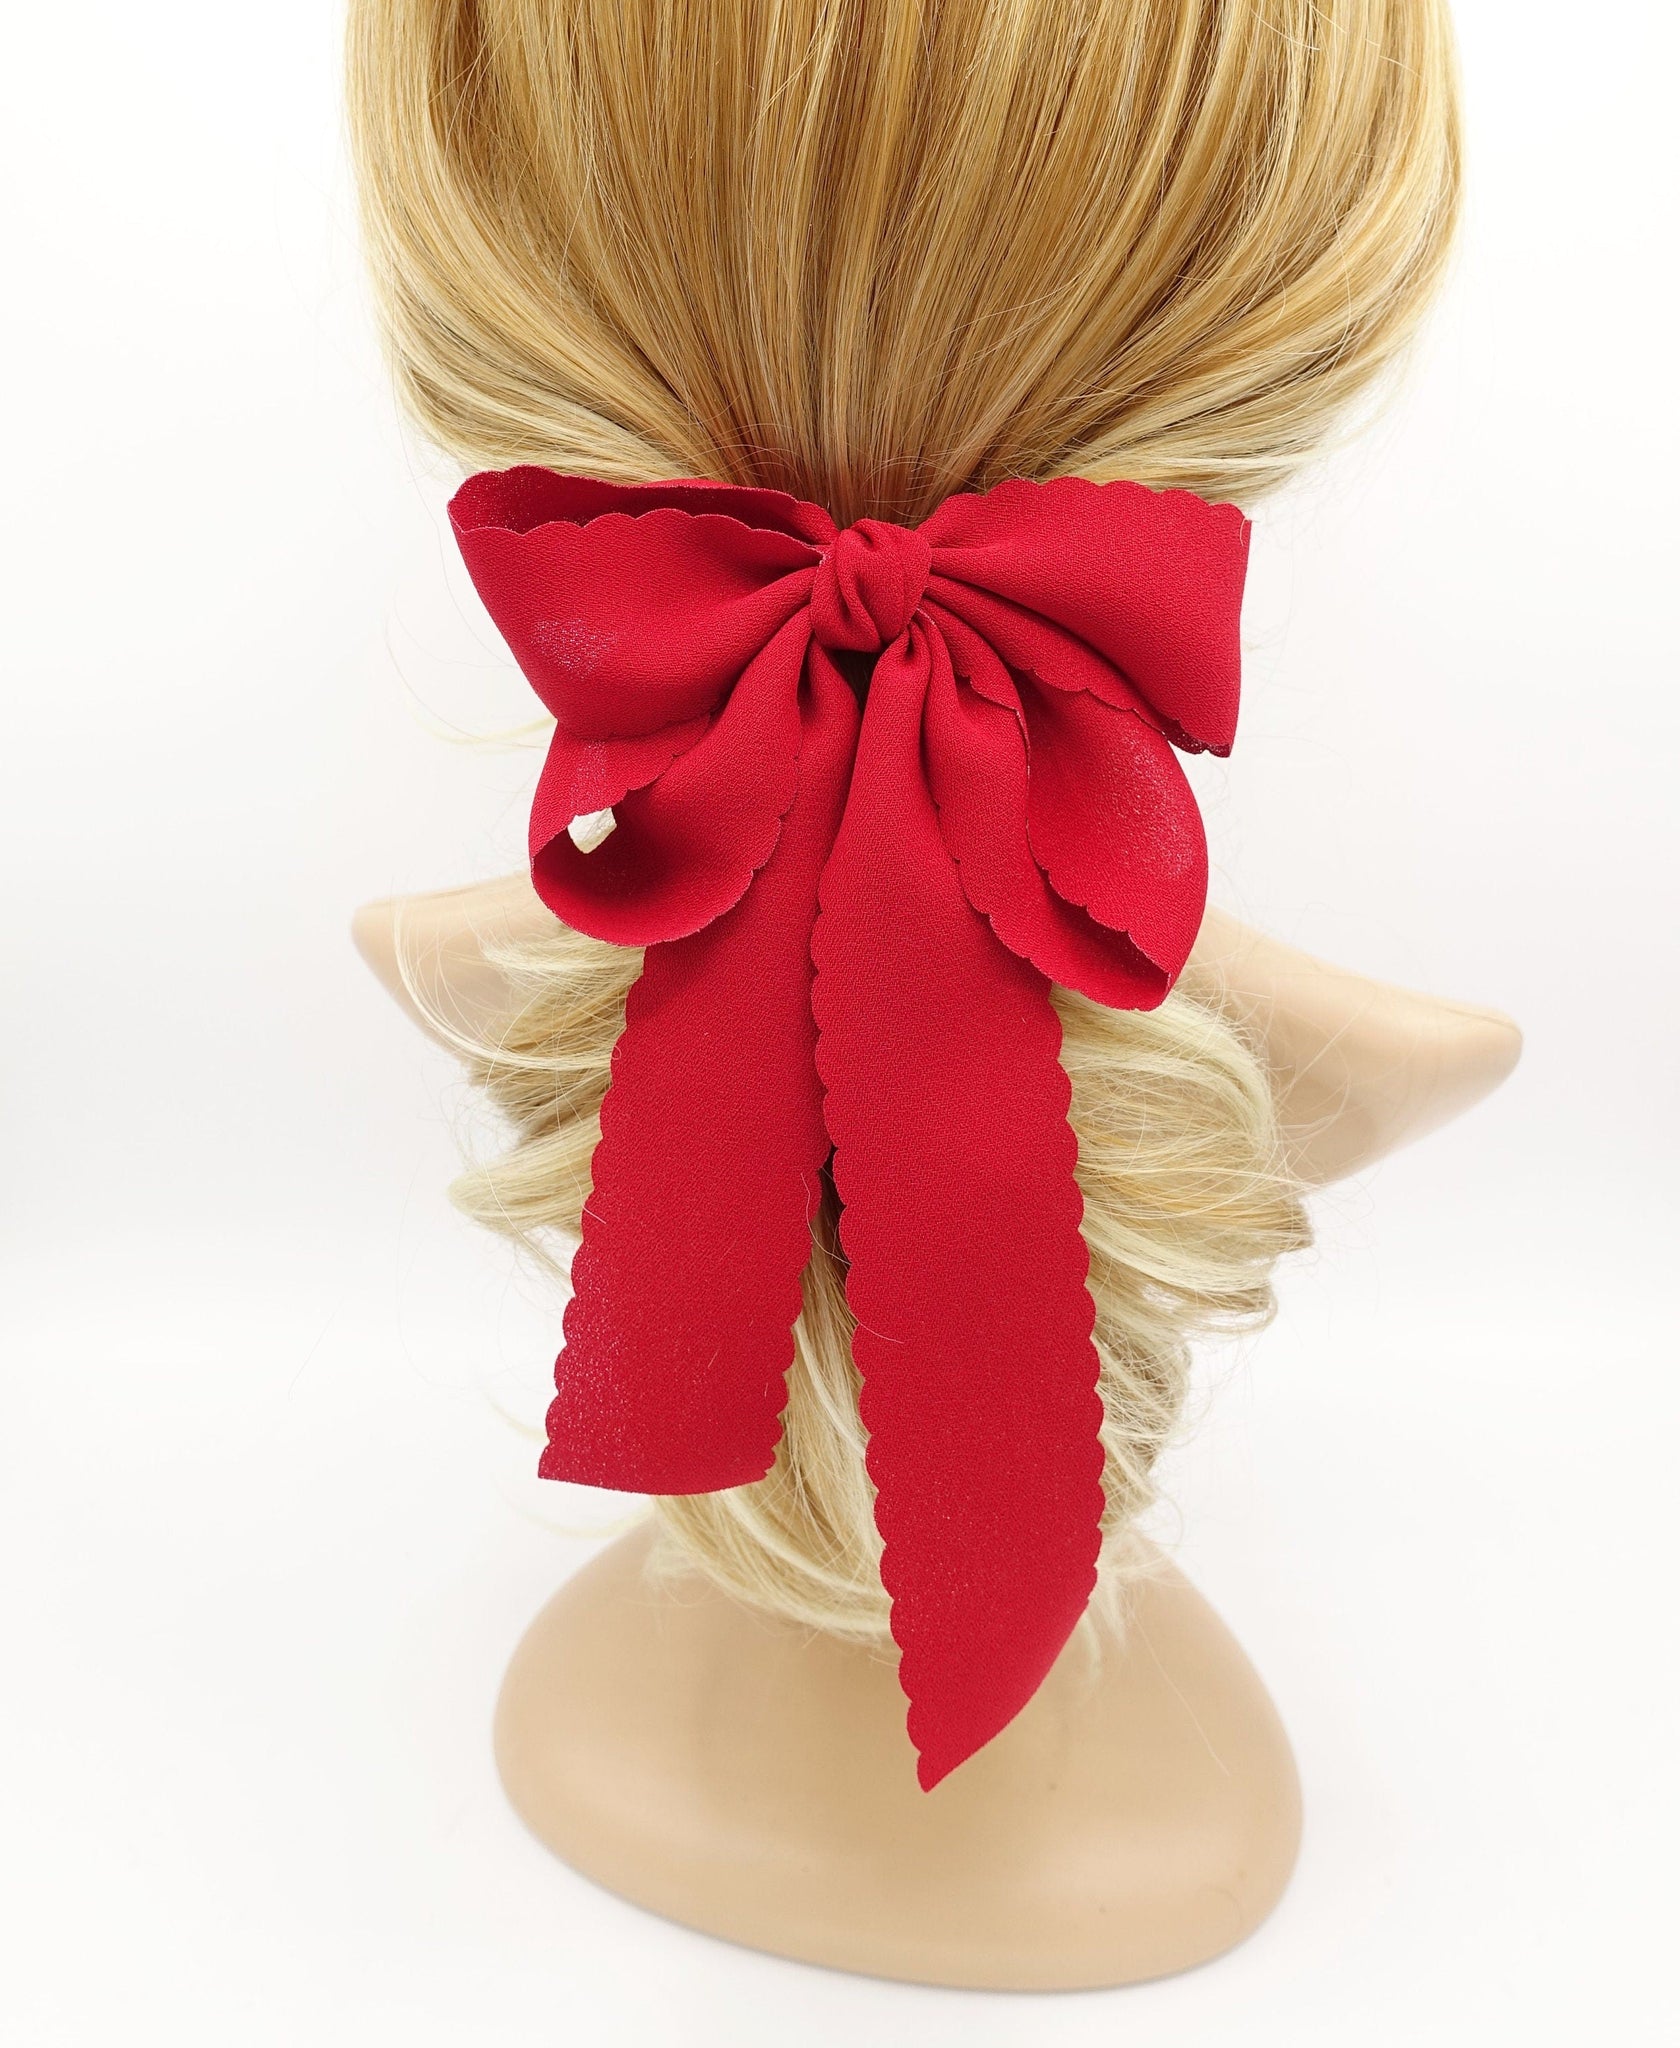 veryshine.com Barrette (Bow) Red wine wave edge hair bow long tail hair barrette women hair accessory